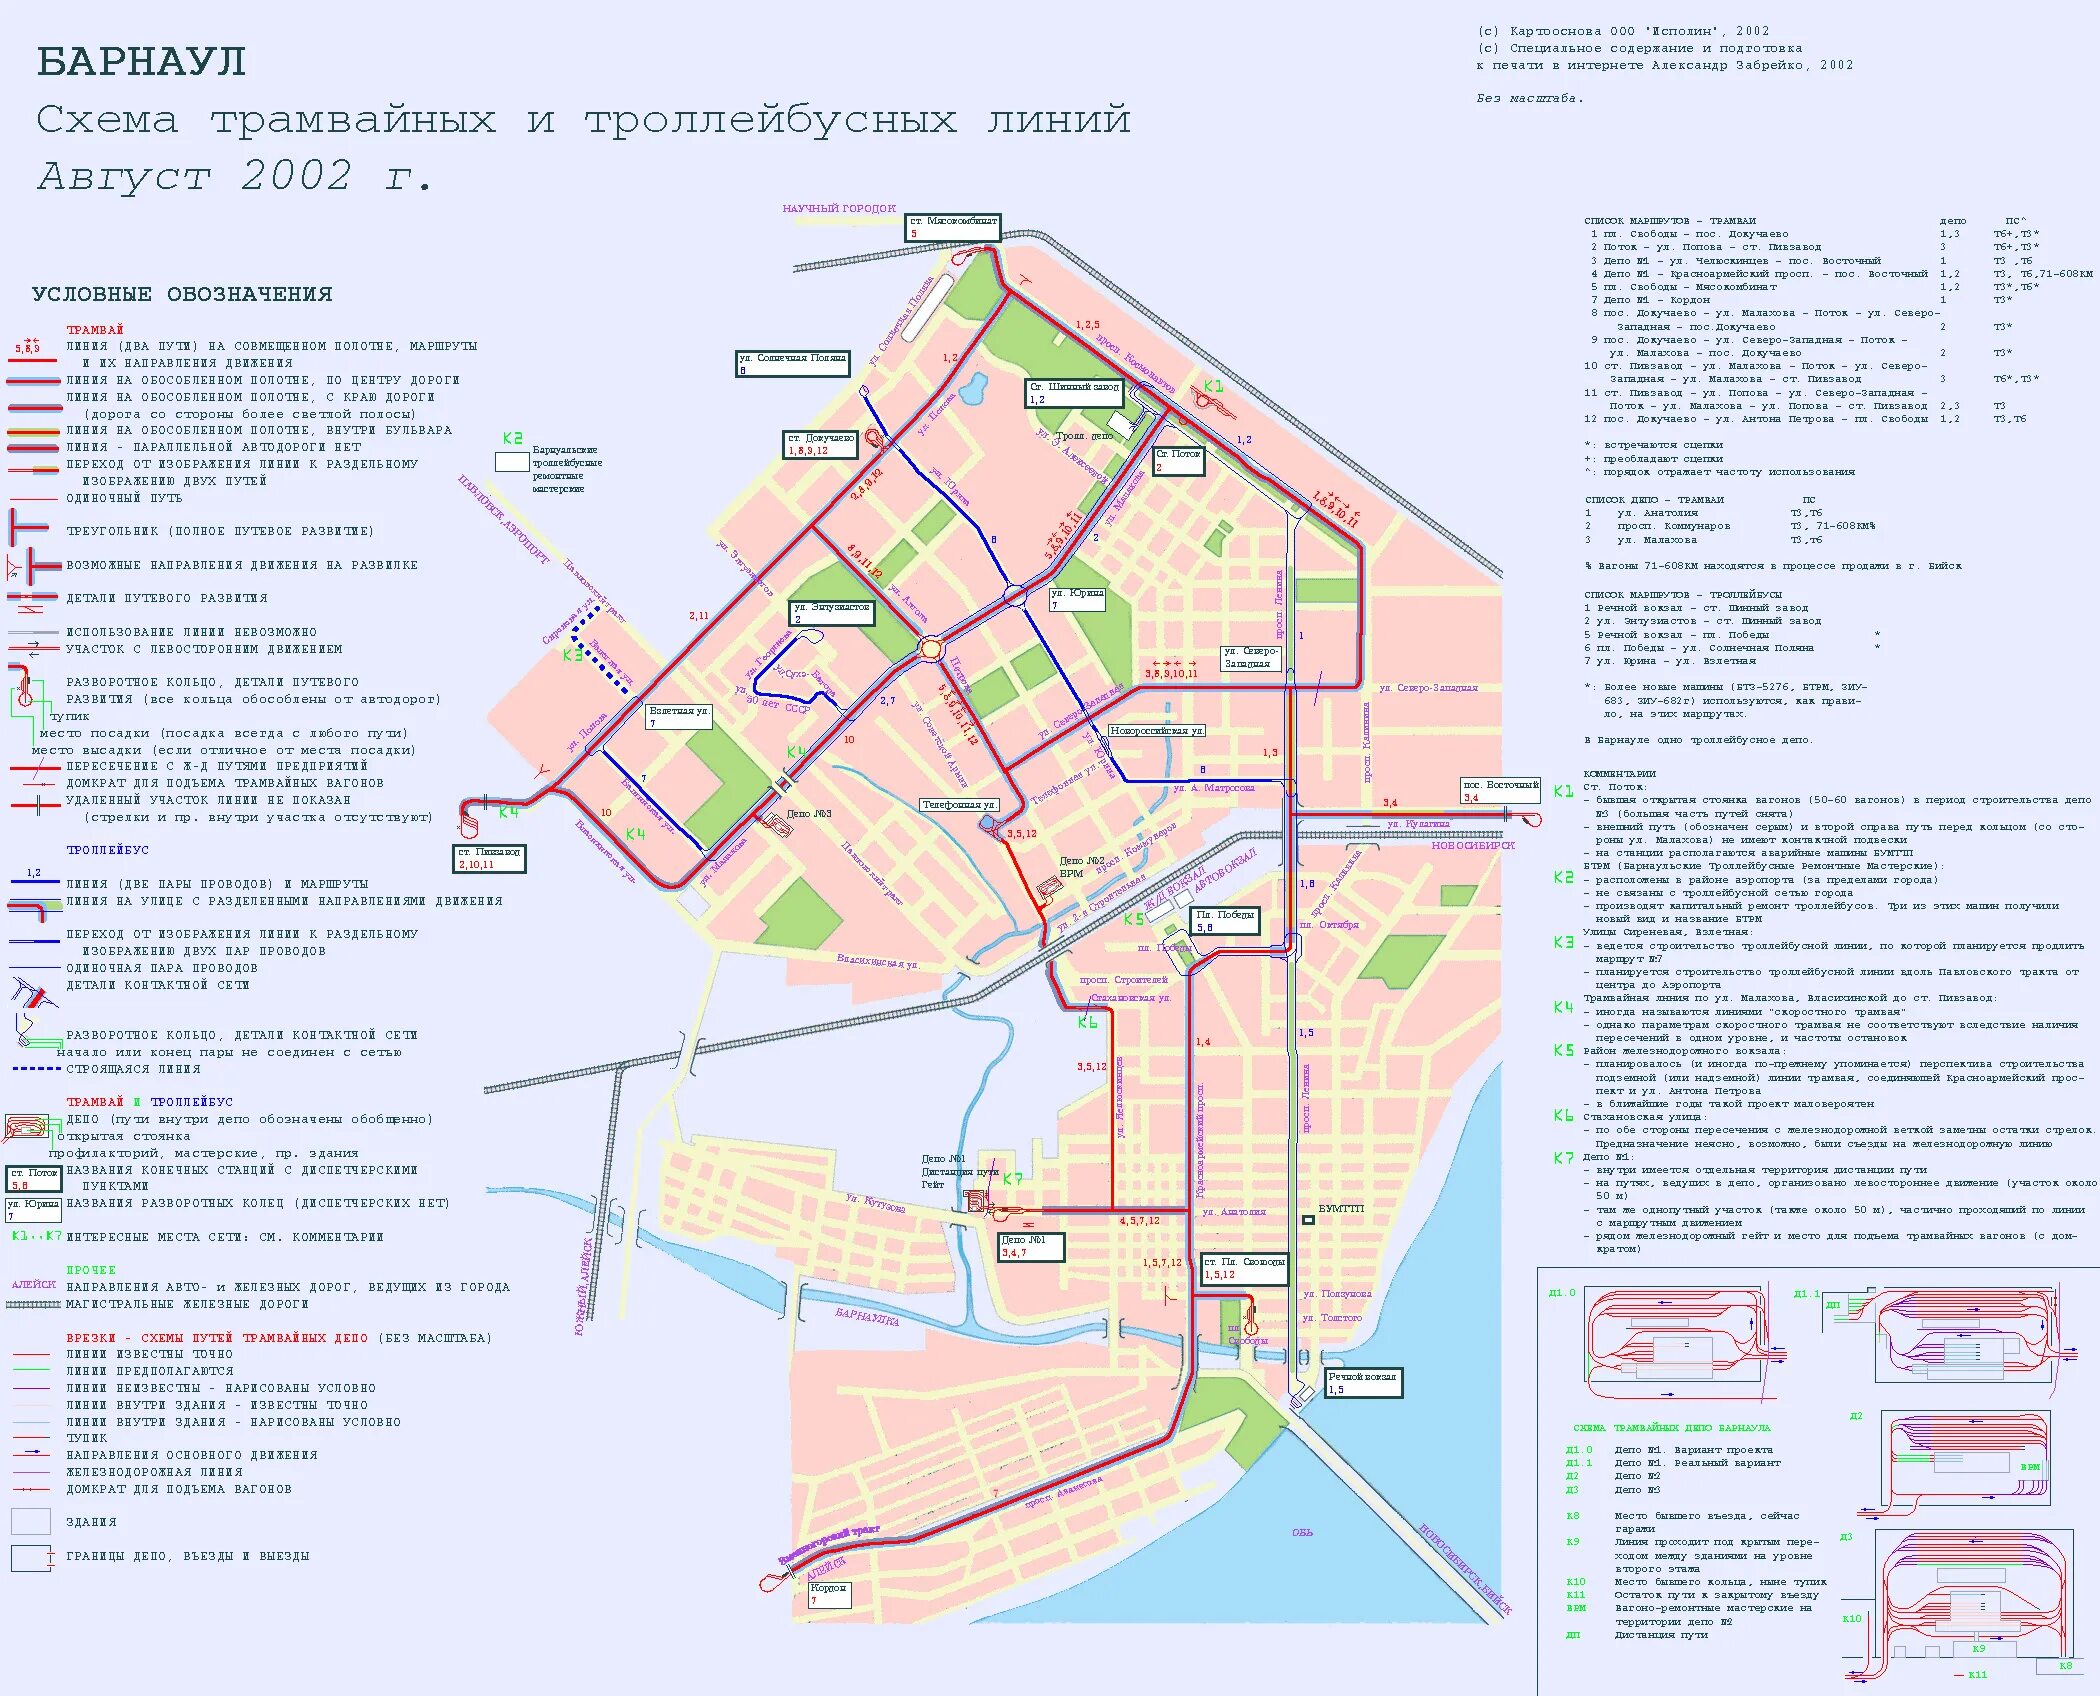 Маршрут трамвая барнаул остановки. Схема движения трамваев в Барнауле. Схема трамвайных маршрутов Барнаула. Схема трамвайных маршрутов Барнаула 2021. Трамвайные пути Барнаул схема.